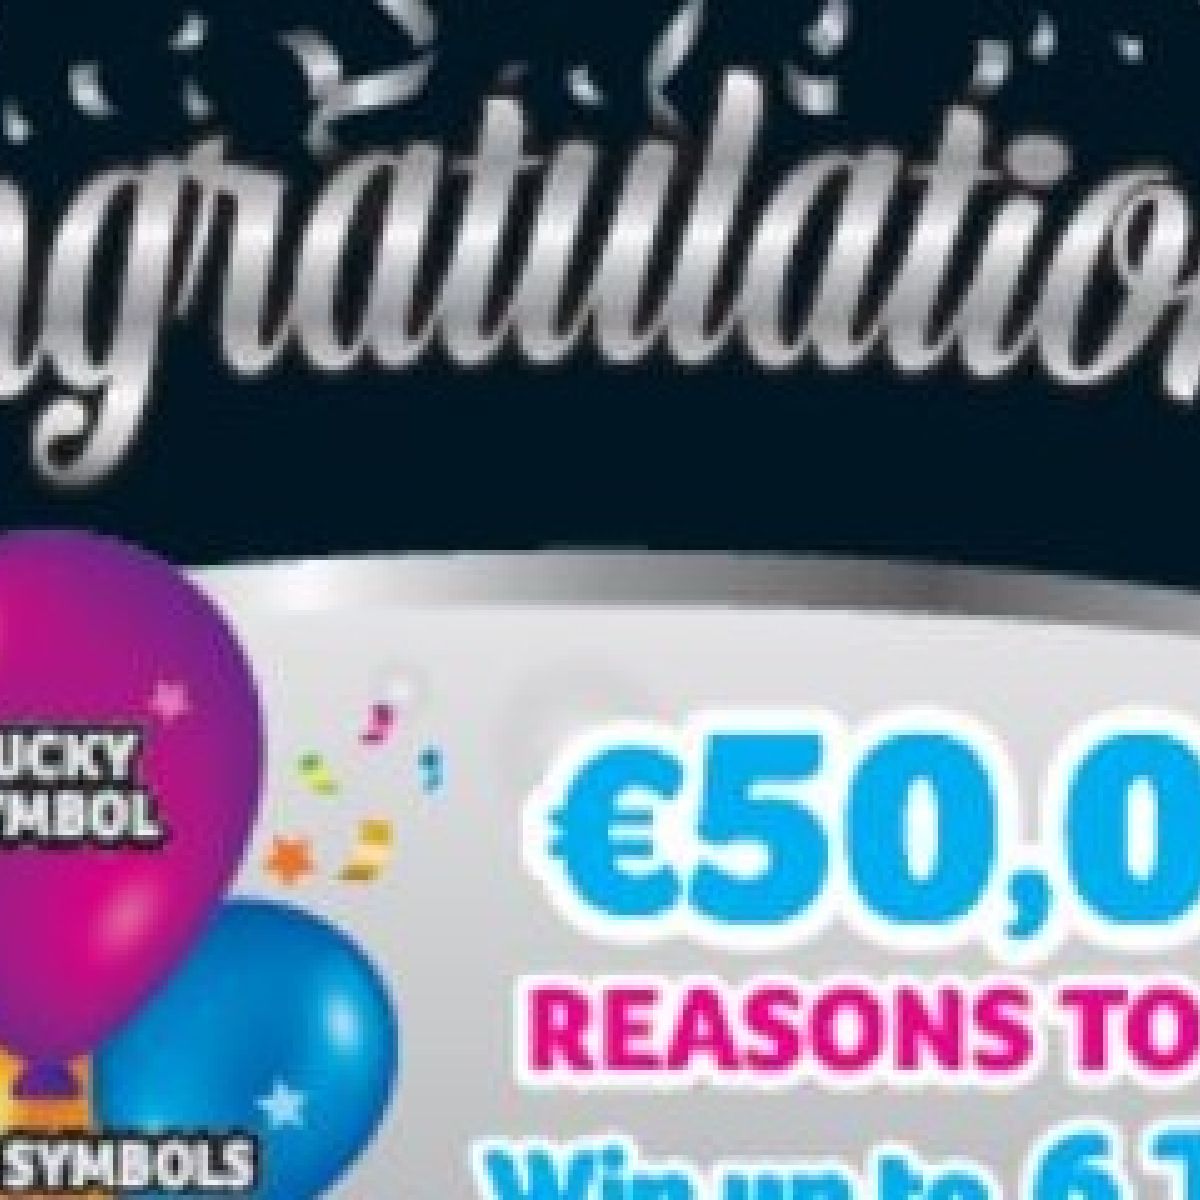 irish lotto results 1 july 2017